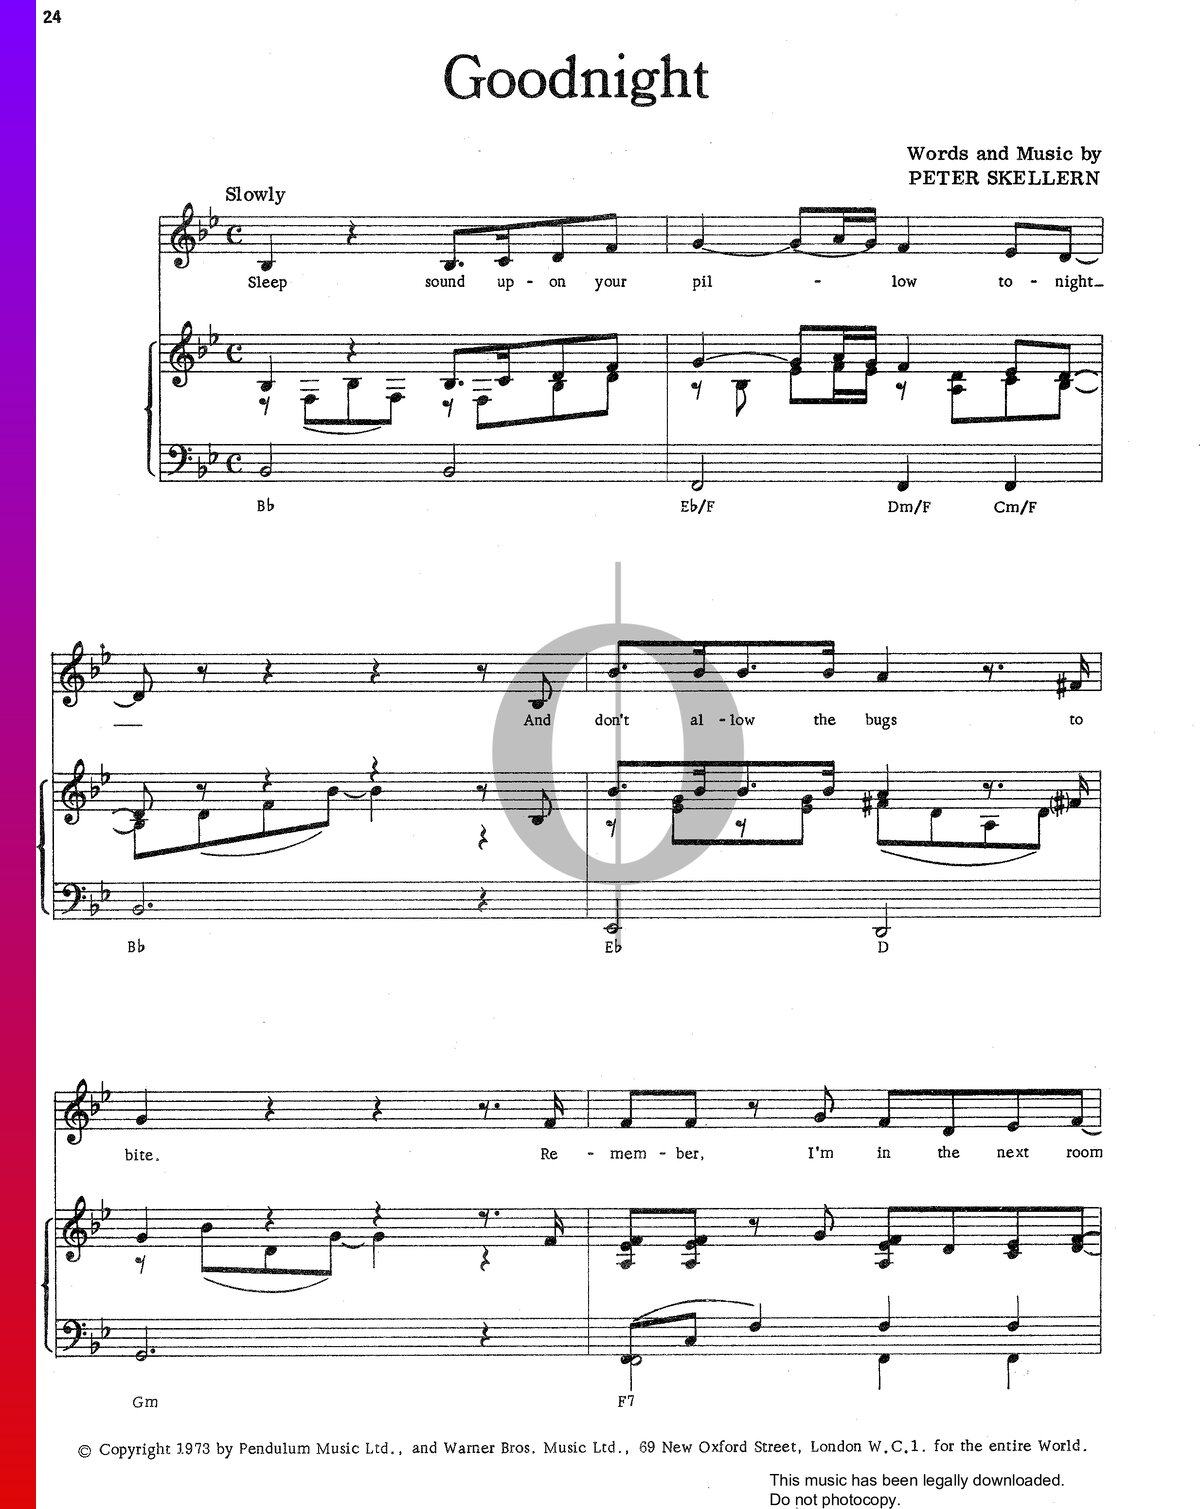 Goodnight Sheet Music (Piano, Voice) - OKTAV